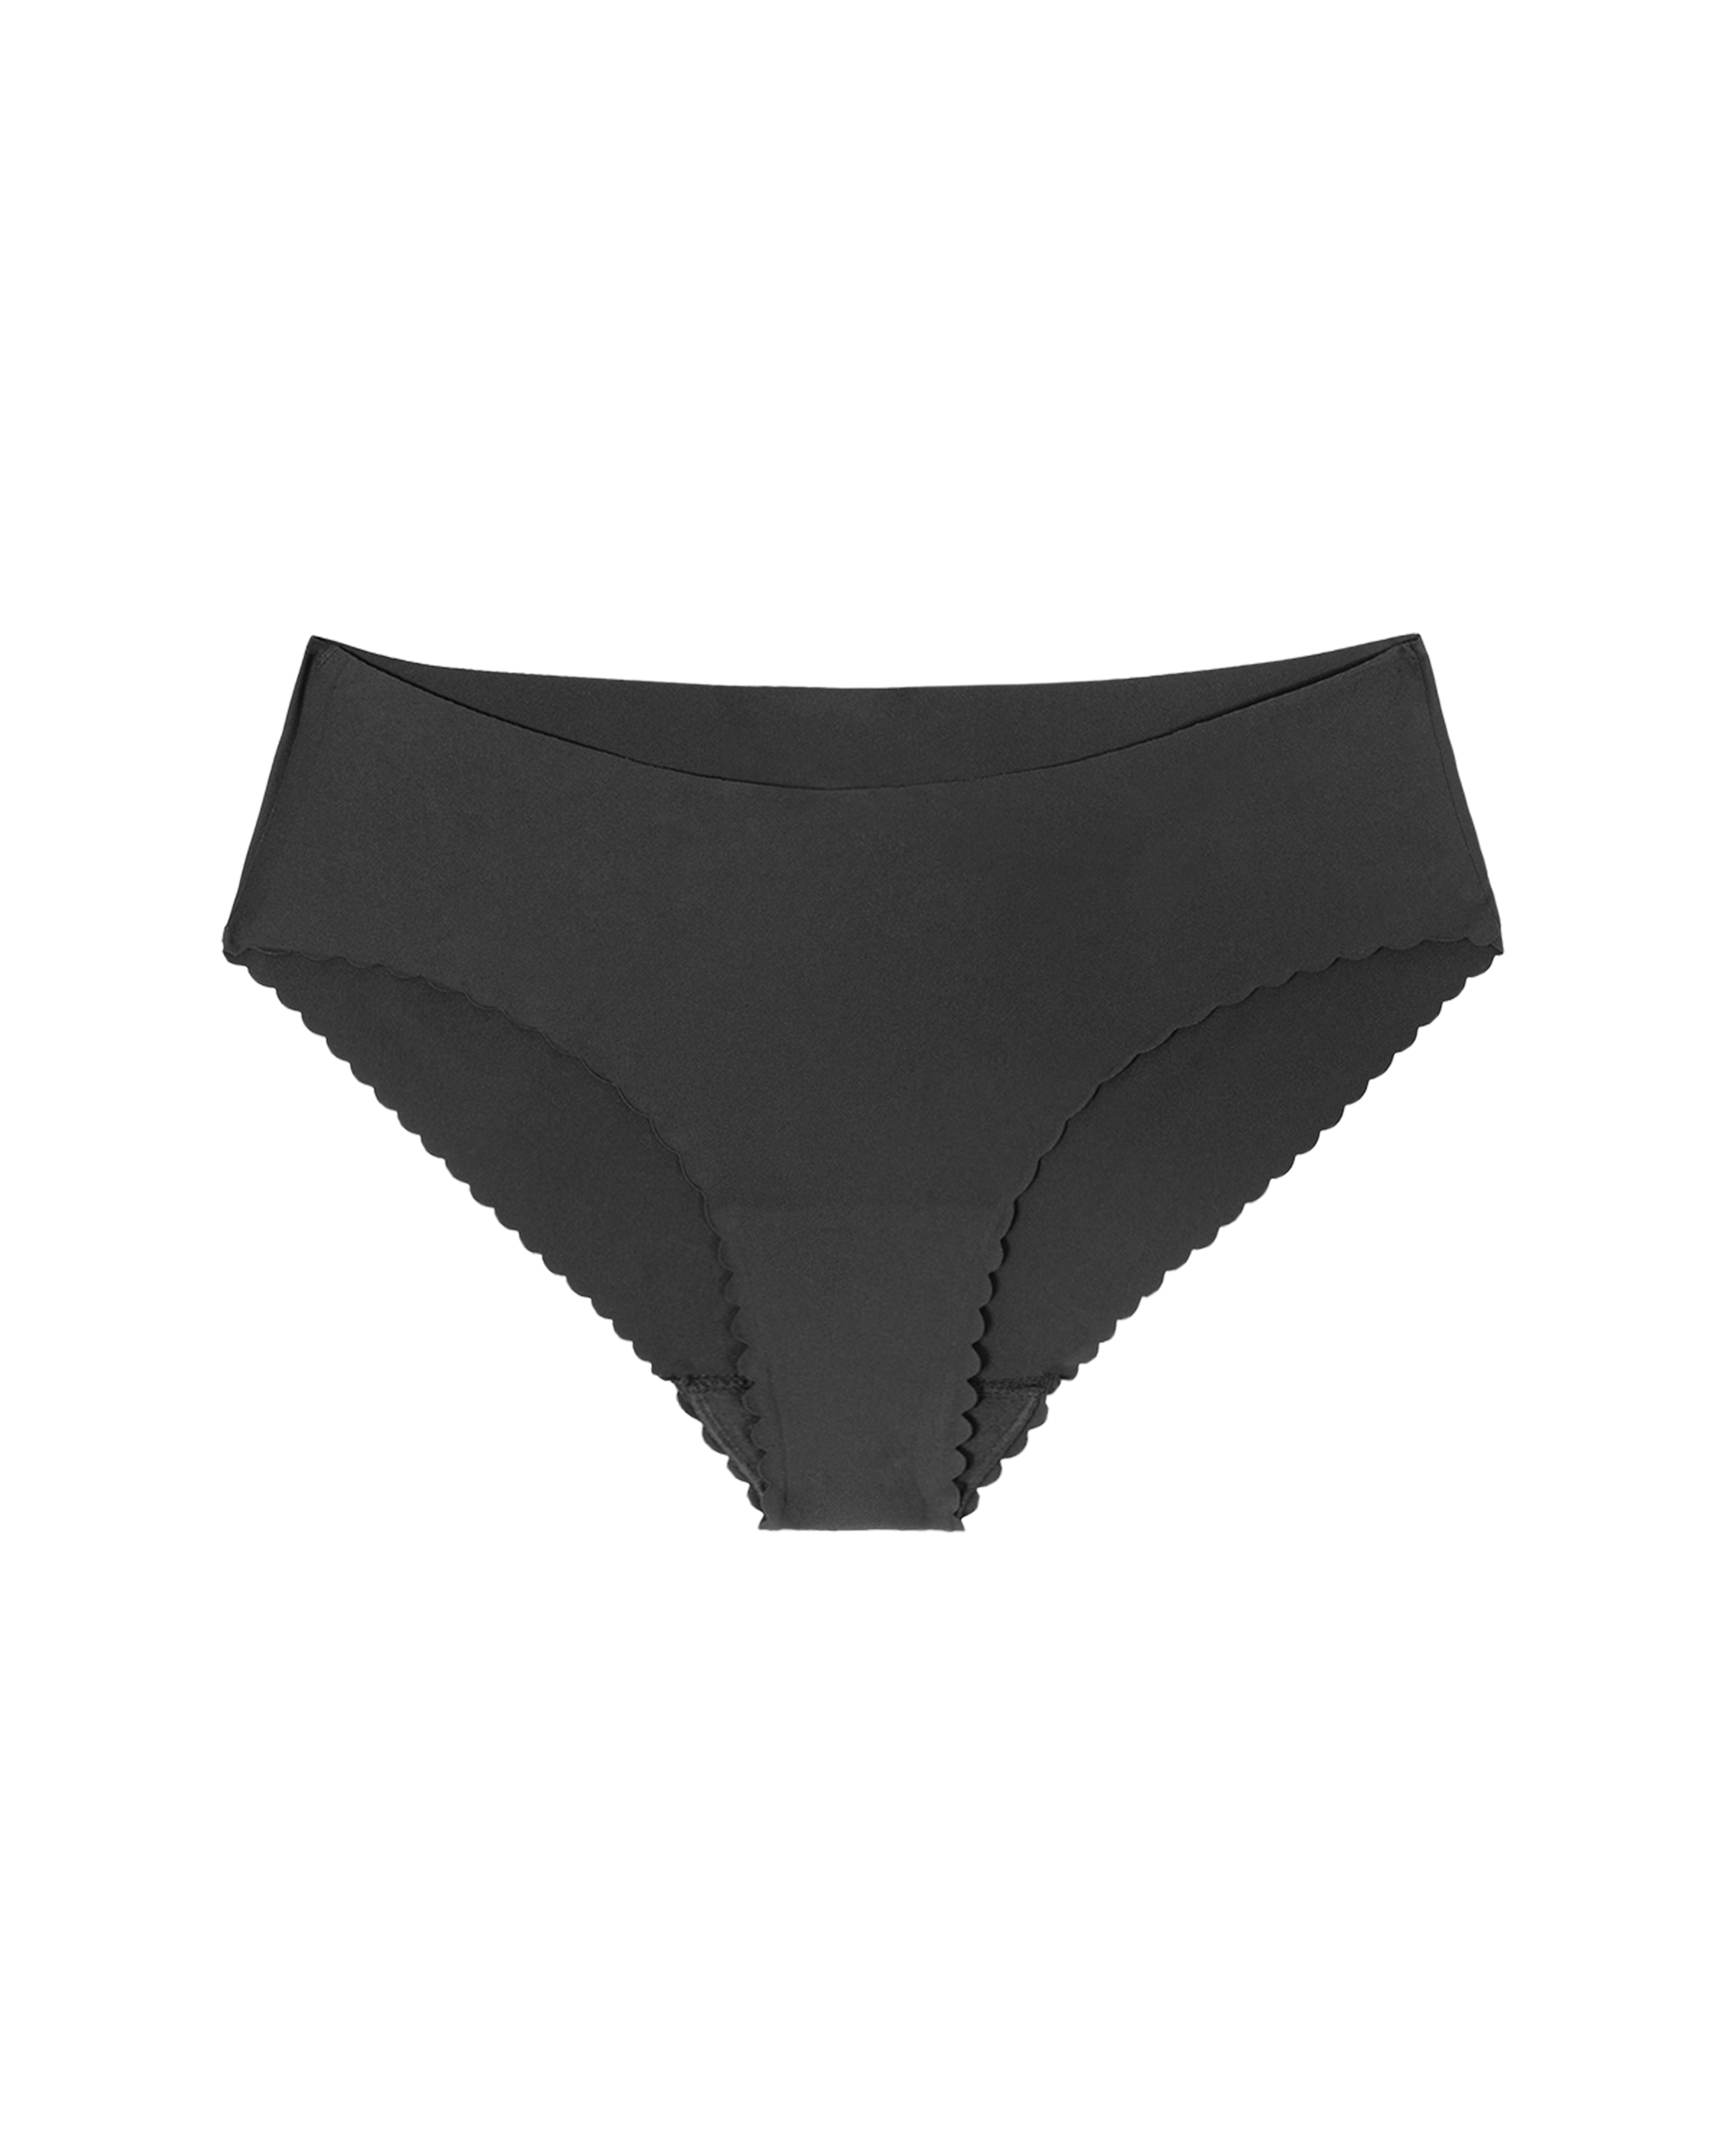 Shero Leakproof Hipster Period Underwear, Odor Control & Moisture Wicking  Underwear for Women -  Norway